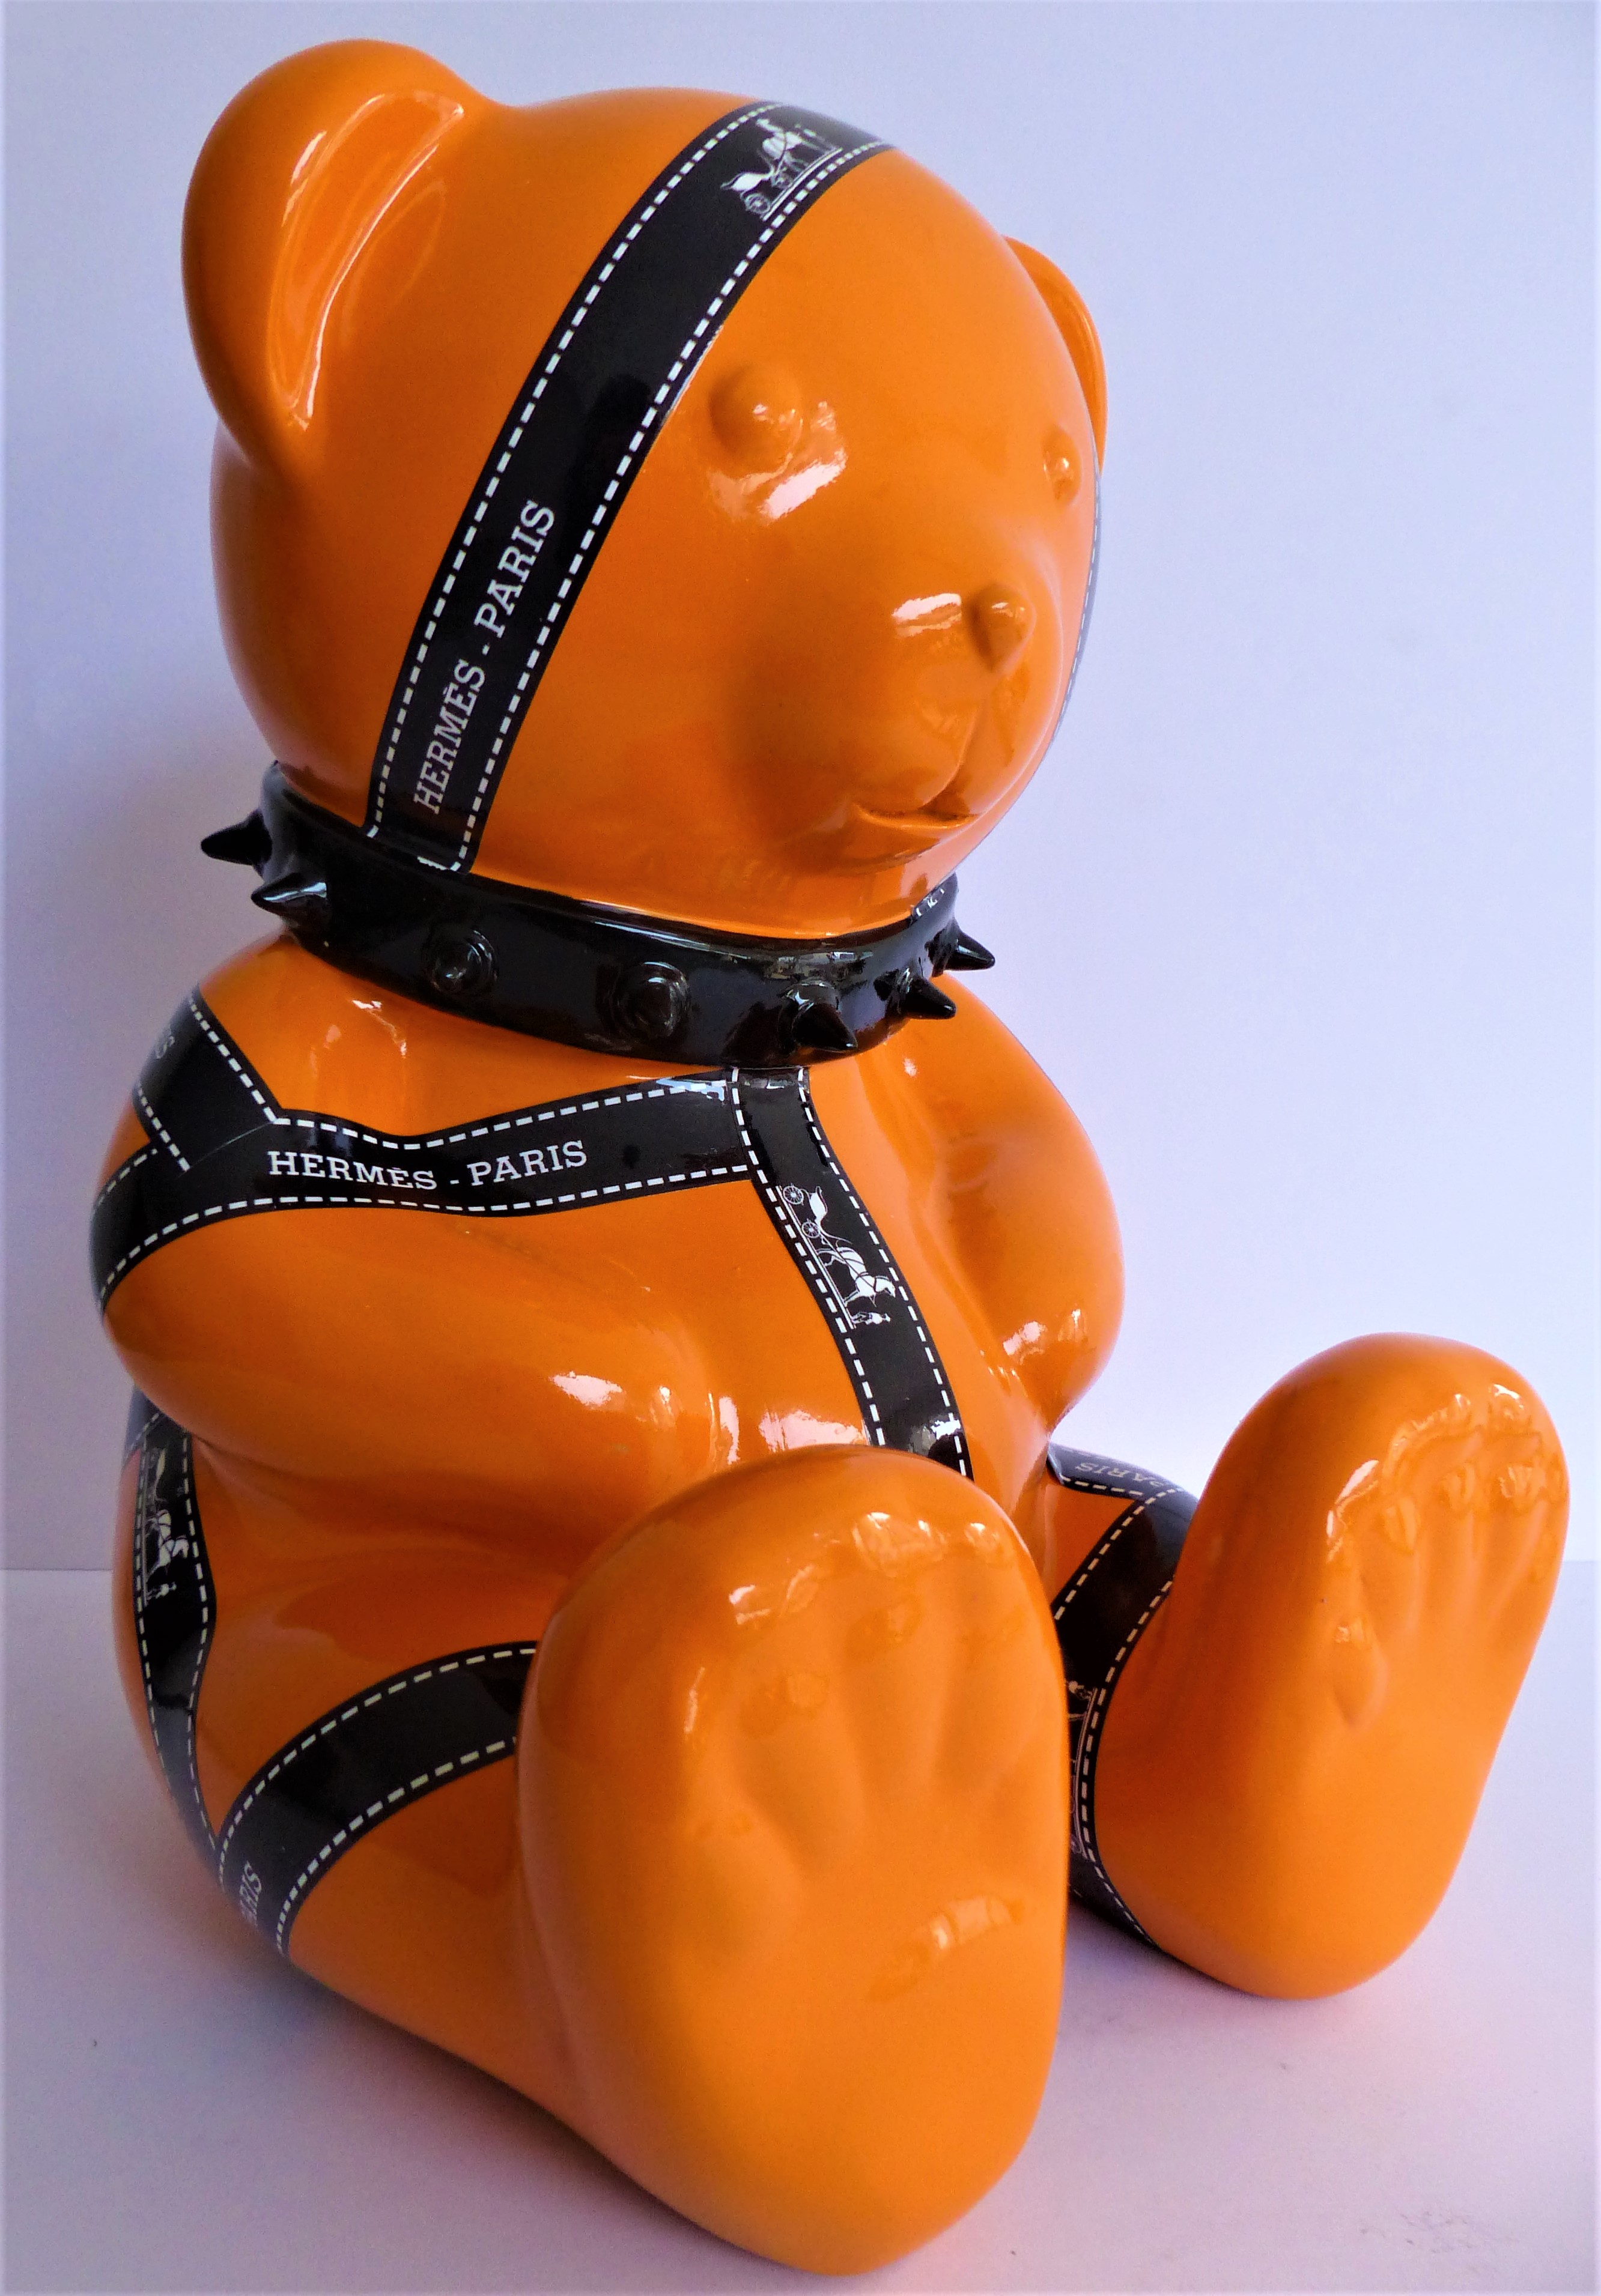 Bear - - Plazzart Patrick Crazy - KONRAD Hermès Sculpture - Revelations